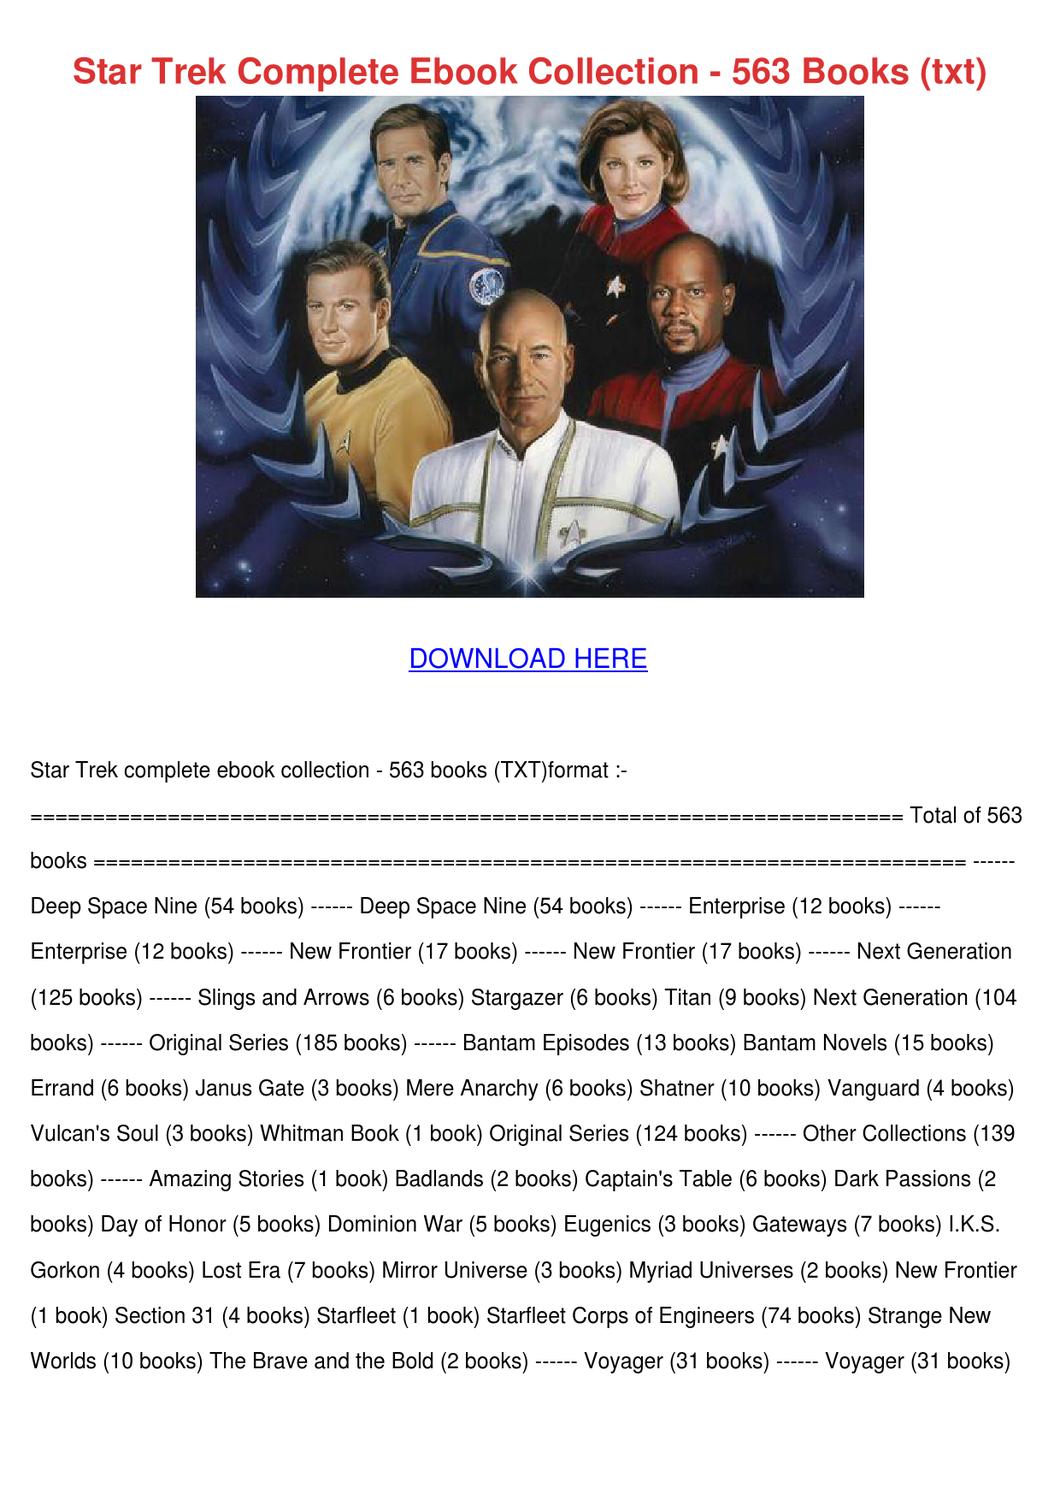 Star Trek Complete Ebook Collection 563 Books Online